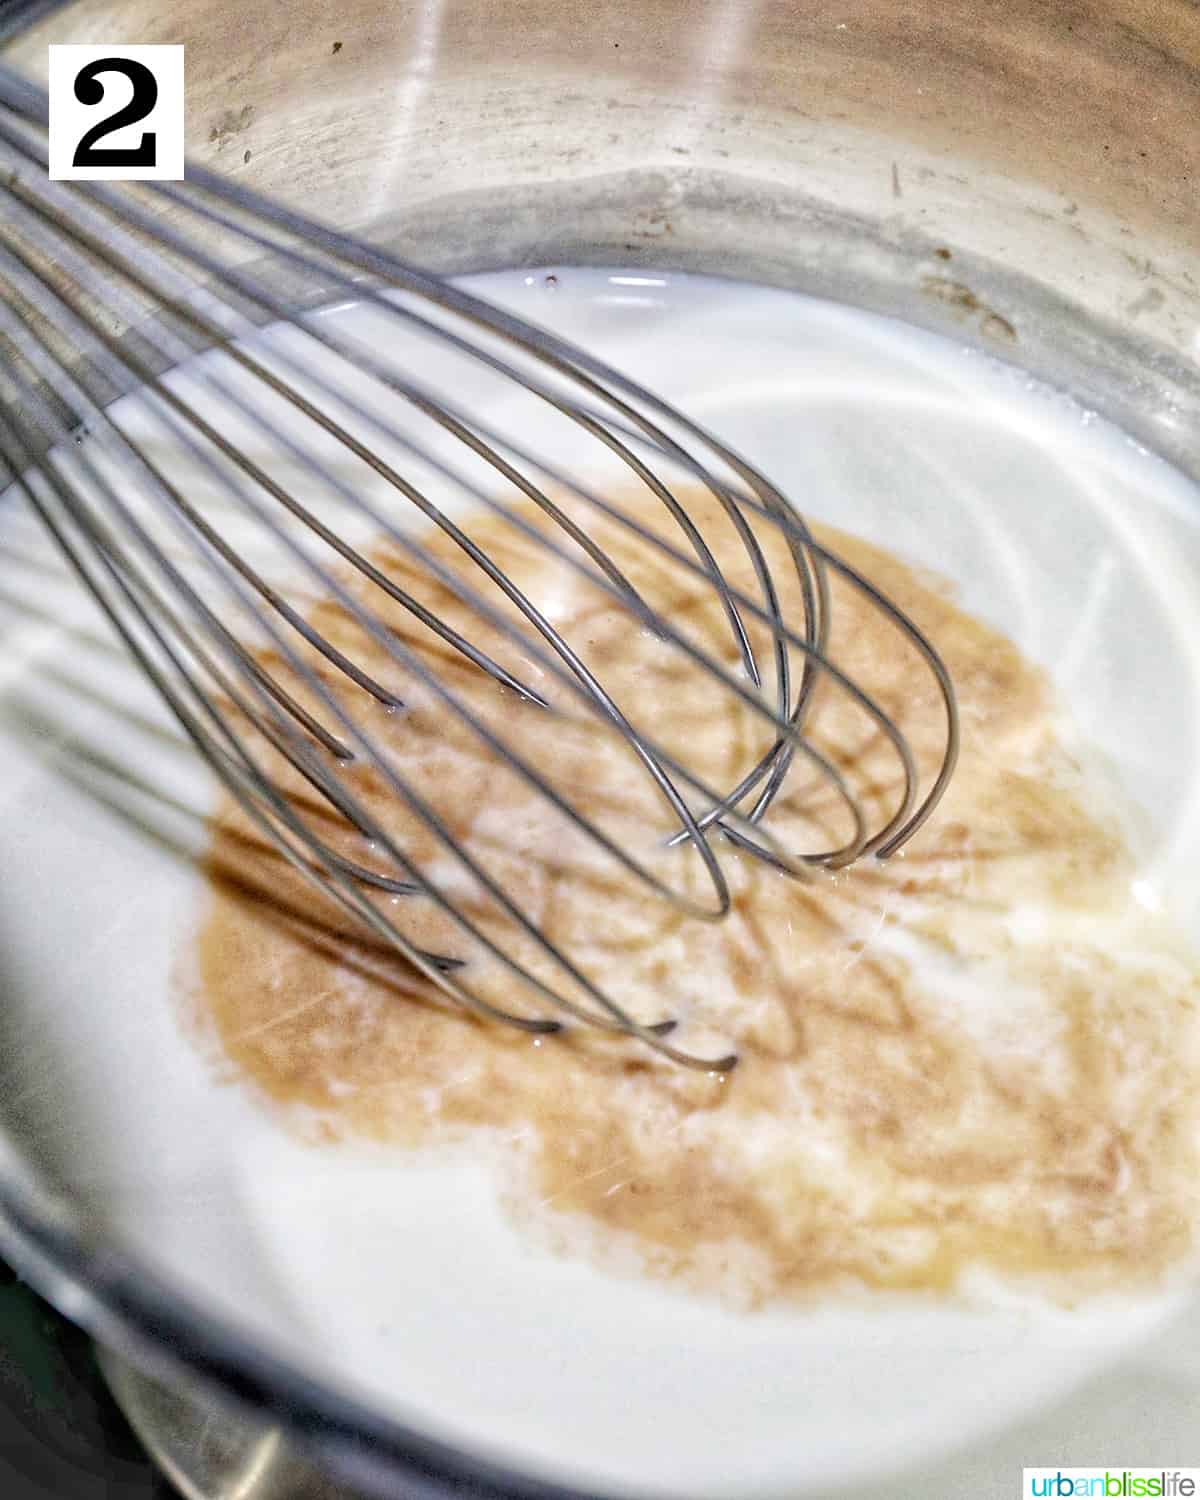 whisking sugar, cream, and vanilla in a saucepan to make ice cream.